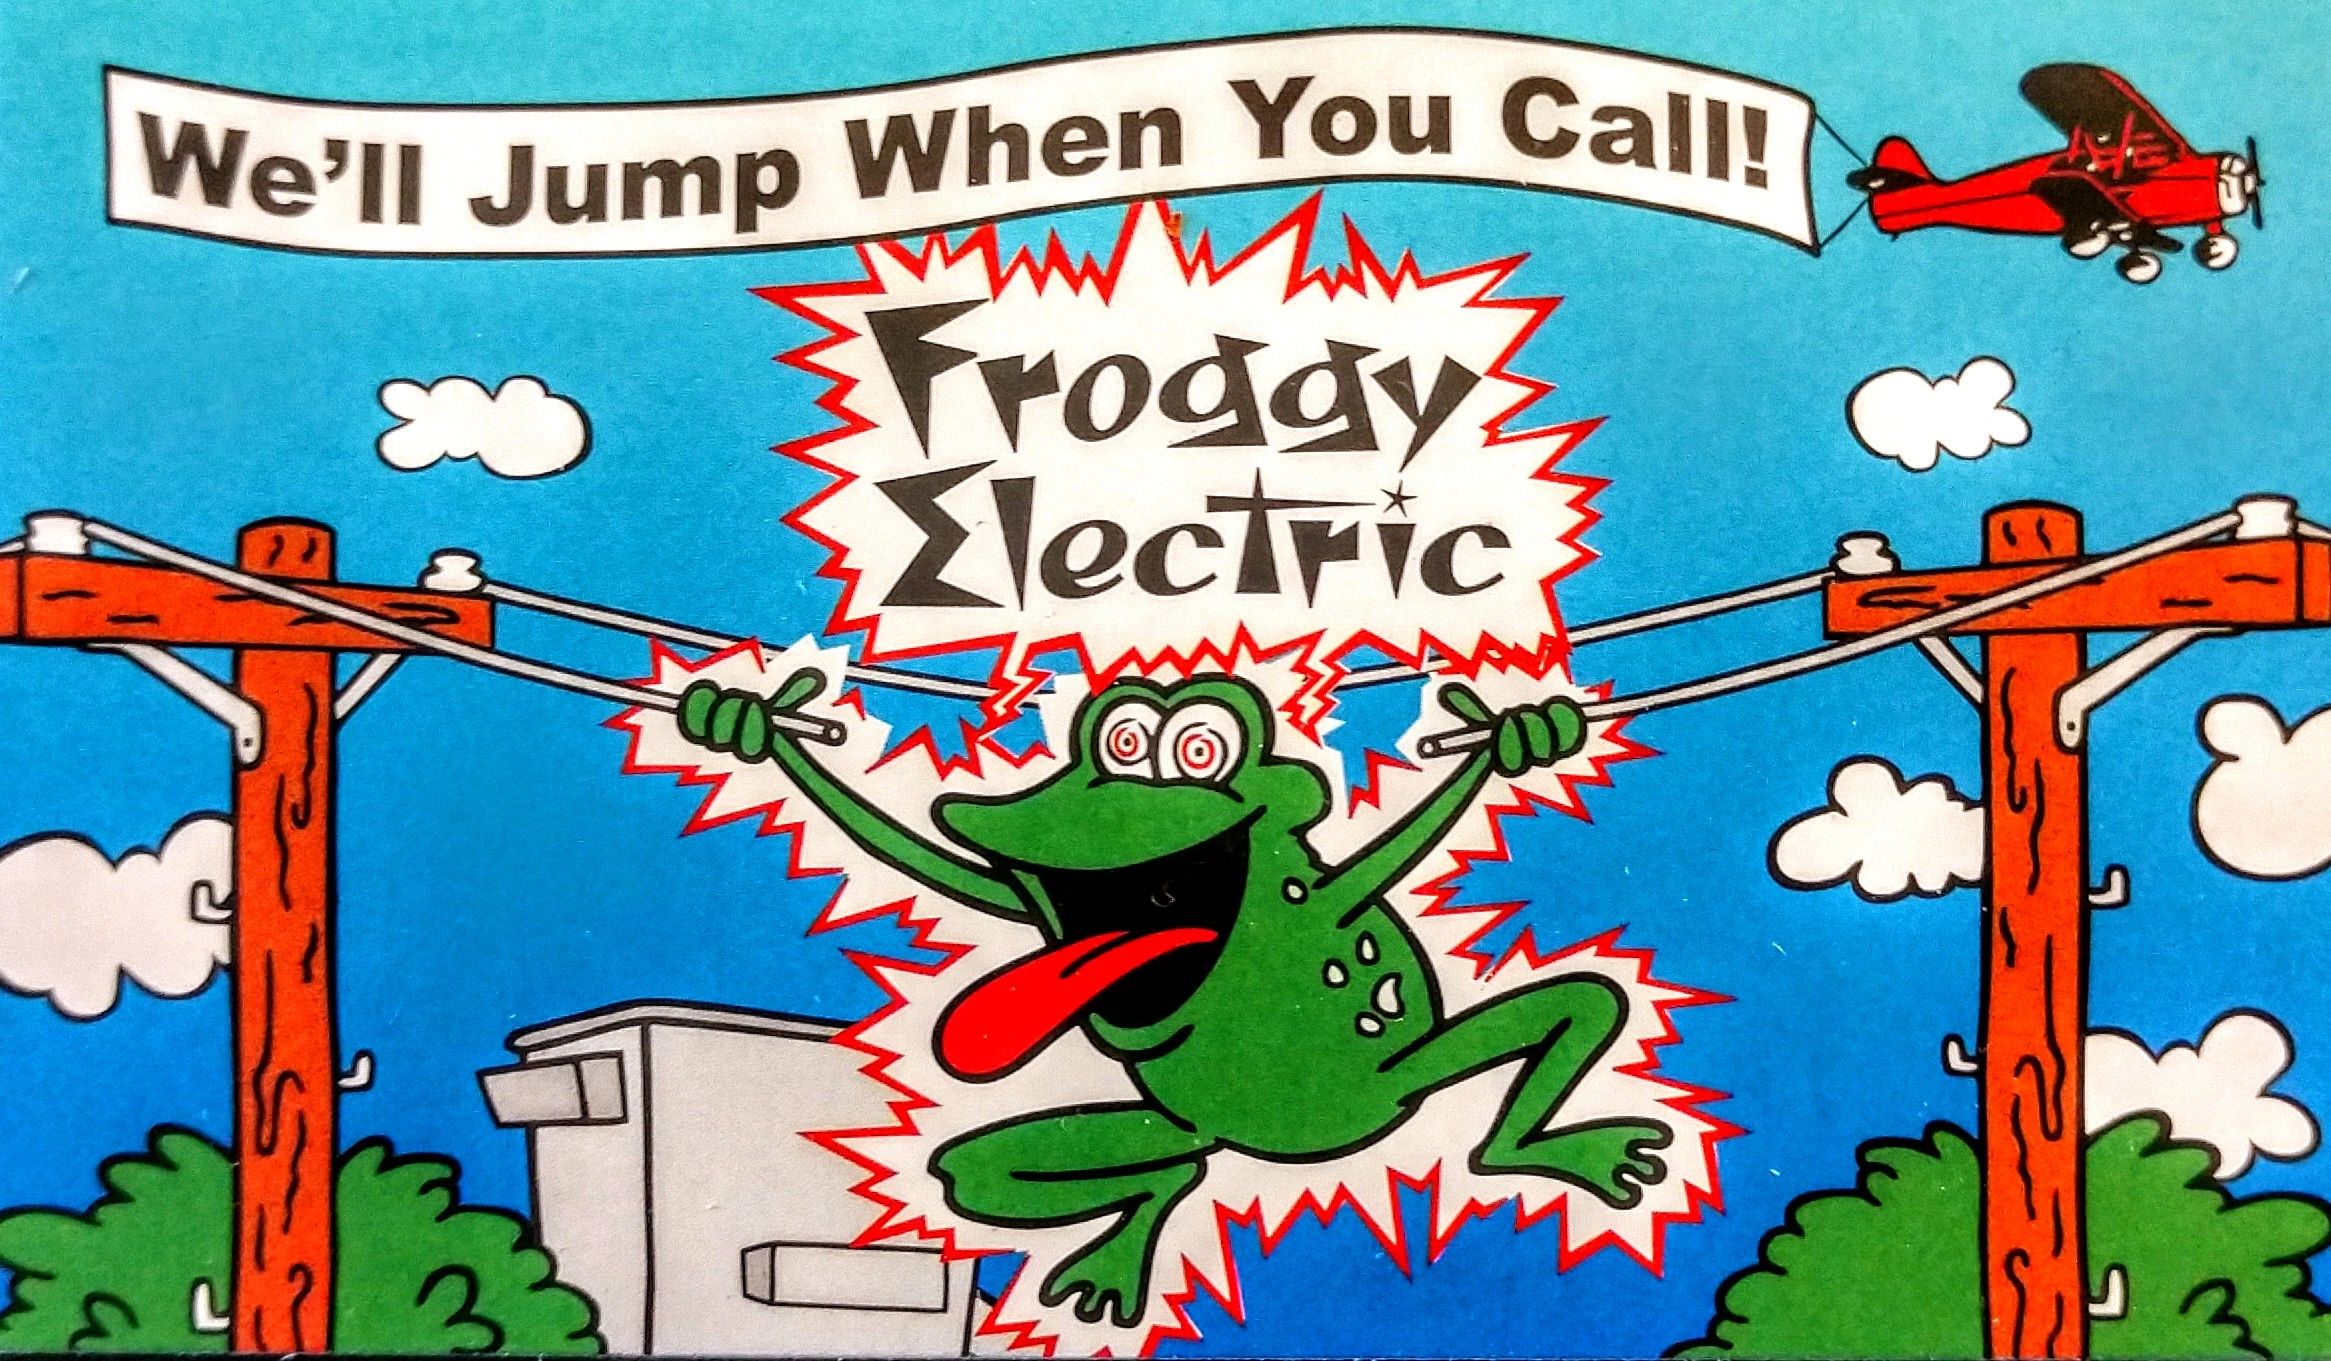 AAA Froggy Electric